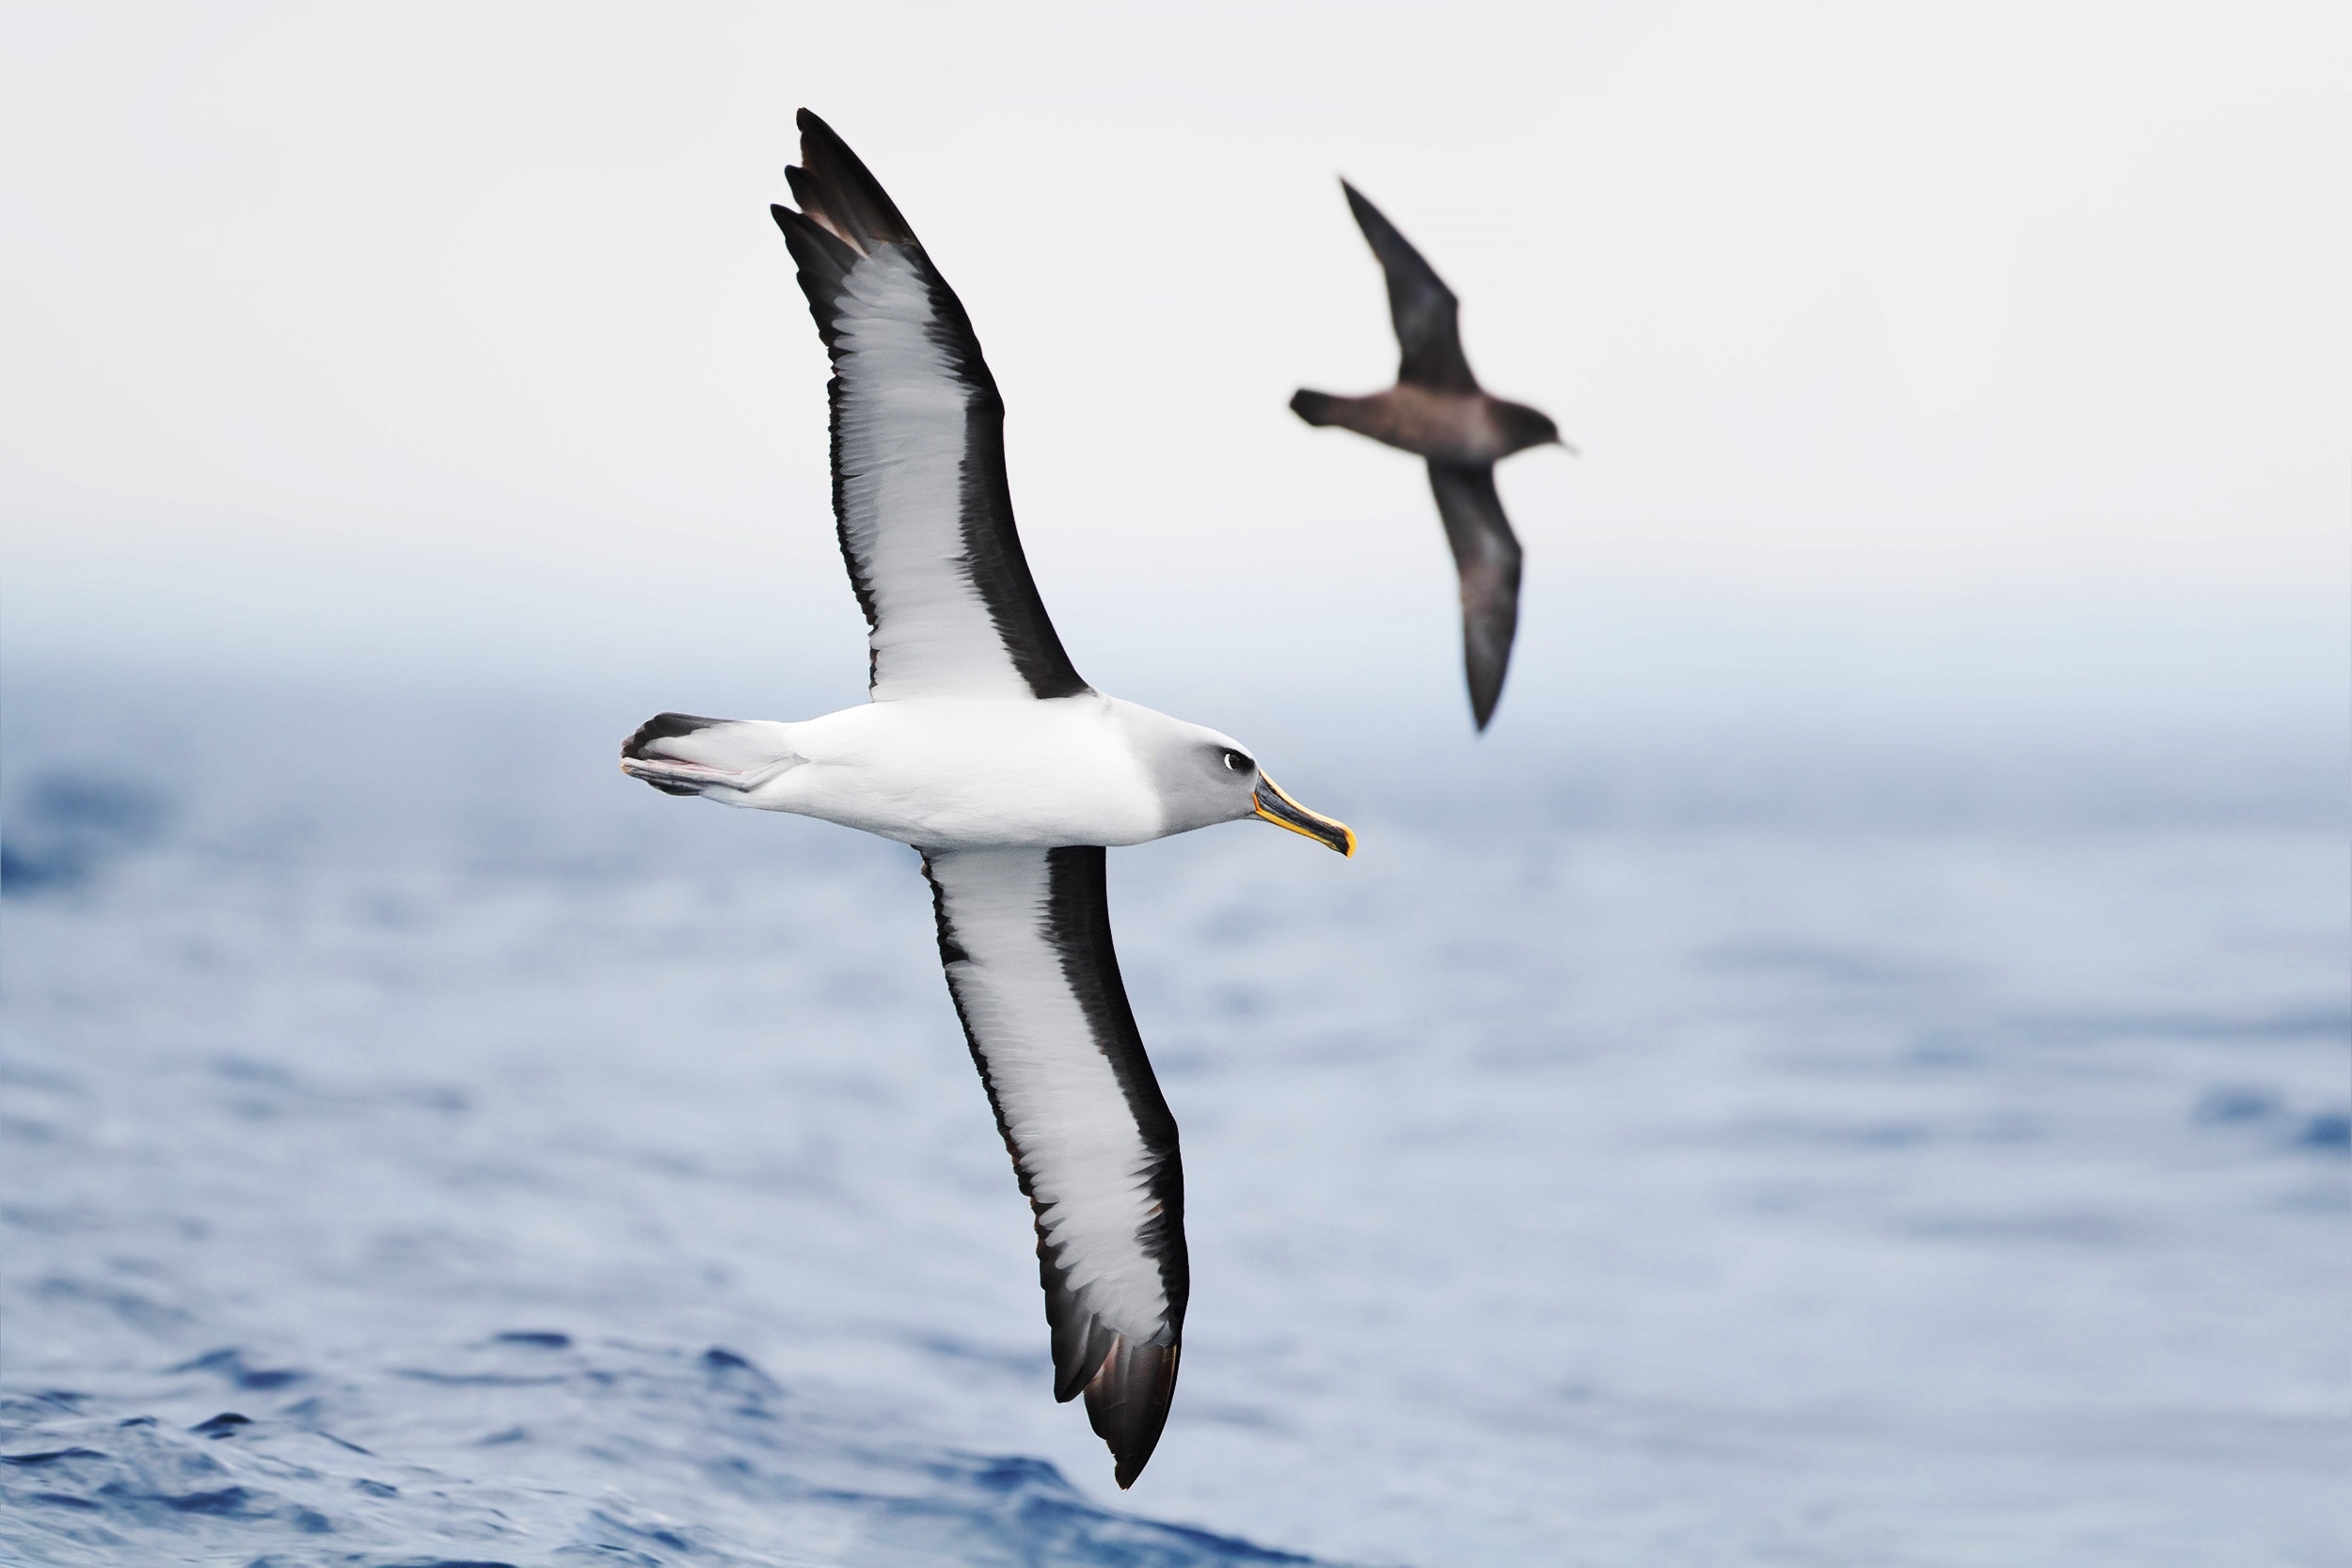 Albatross wallpapers, Captivating bird images, Stunning avian photography, Desktop backgrounds, 2500x1670 HD Desktop